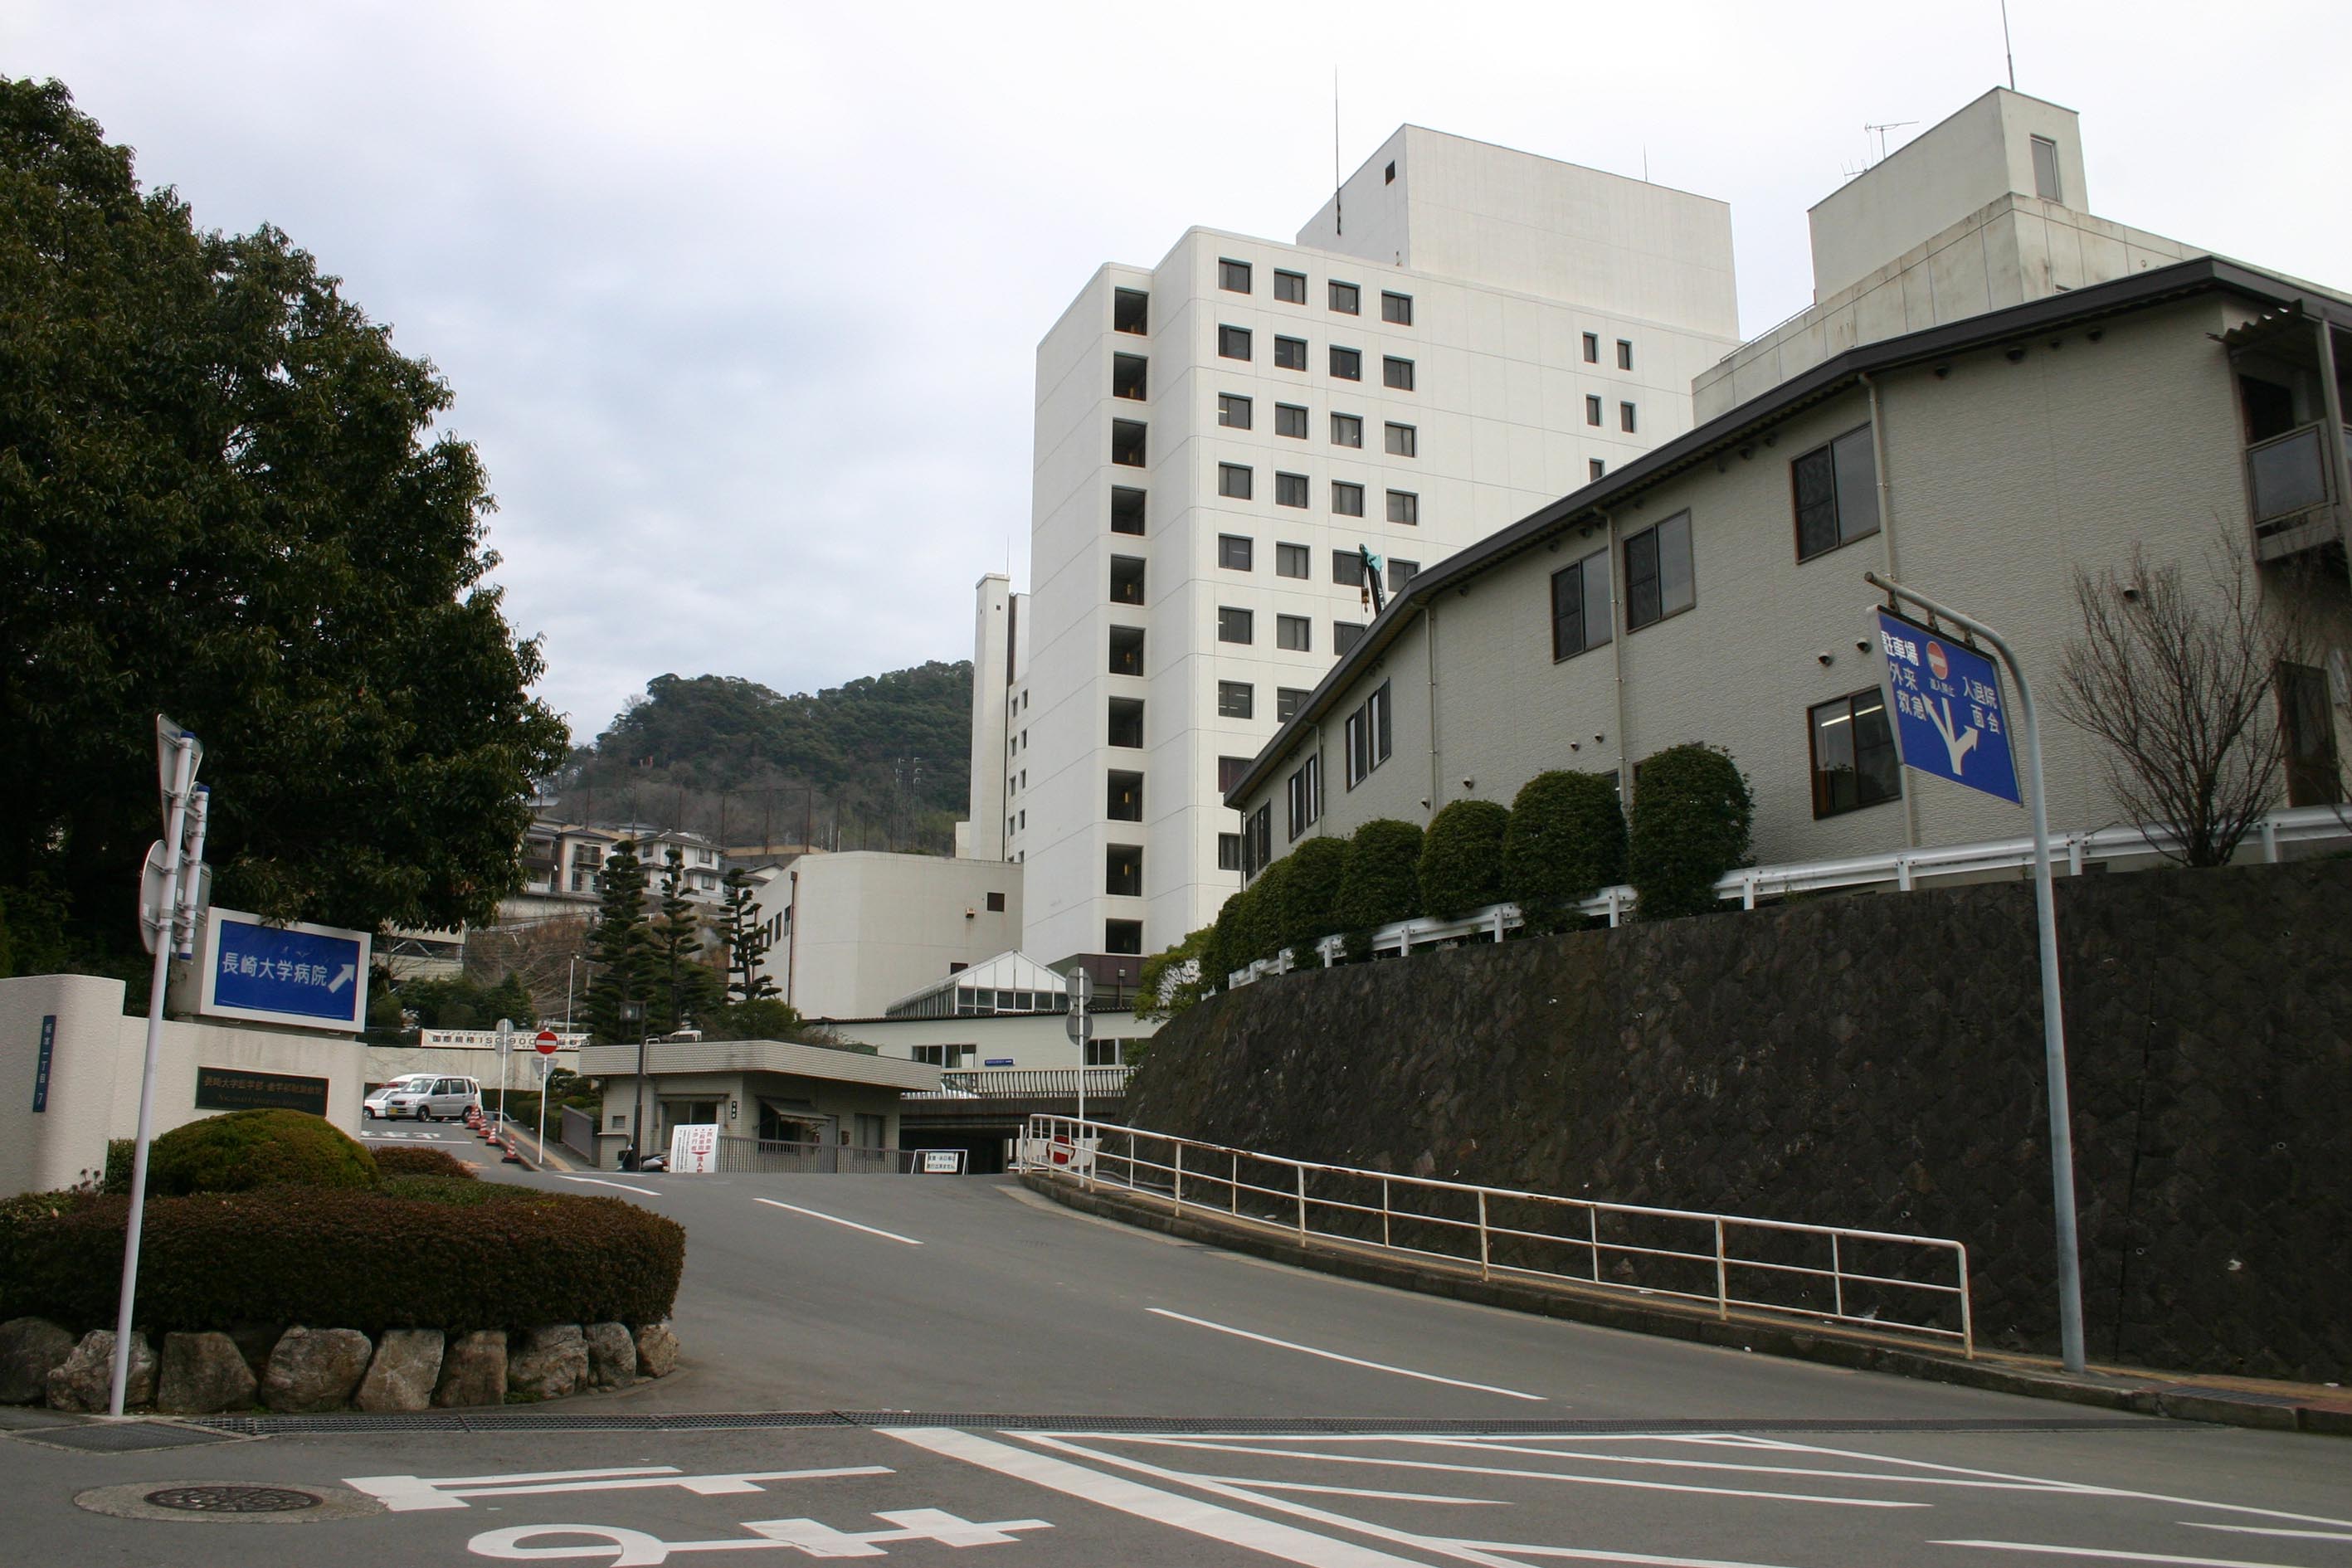 Hospital. 388m to Nagasaki University Hospital (Hospital)